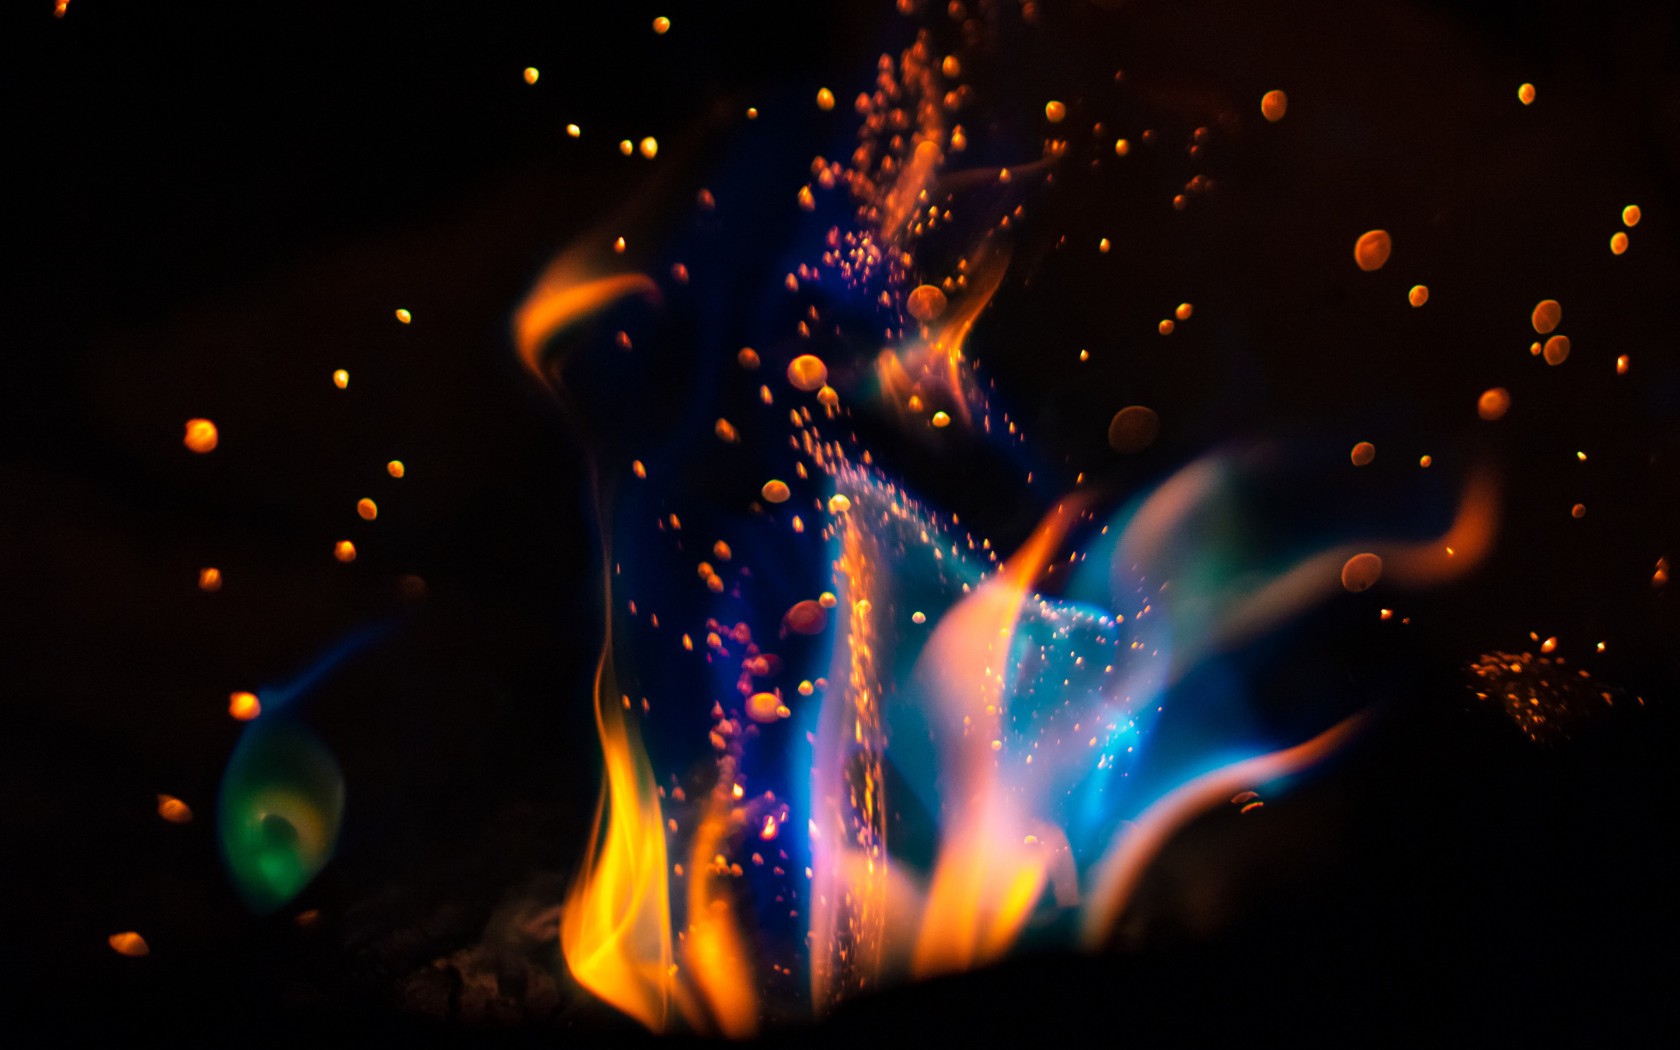 Hot flames in darkness wallpaper 1680x1050